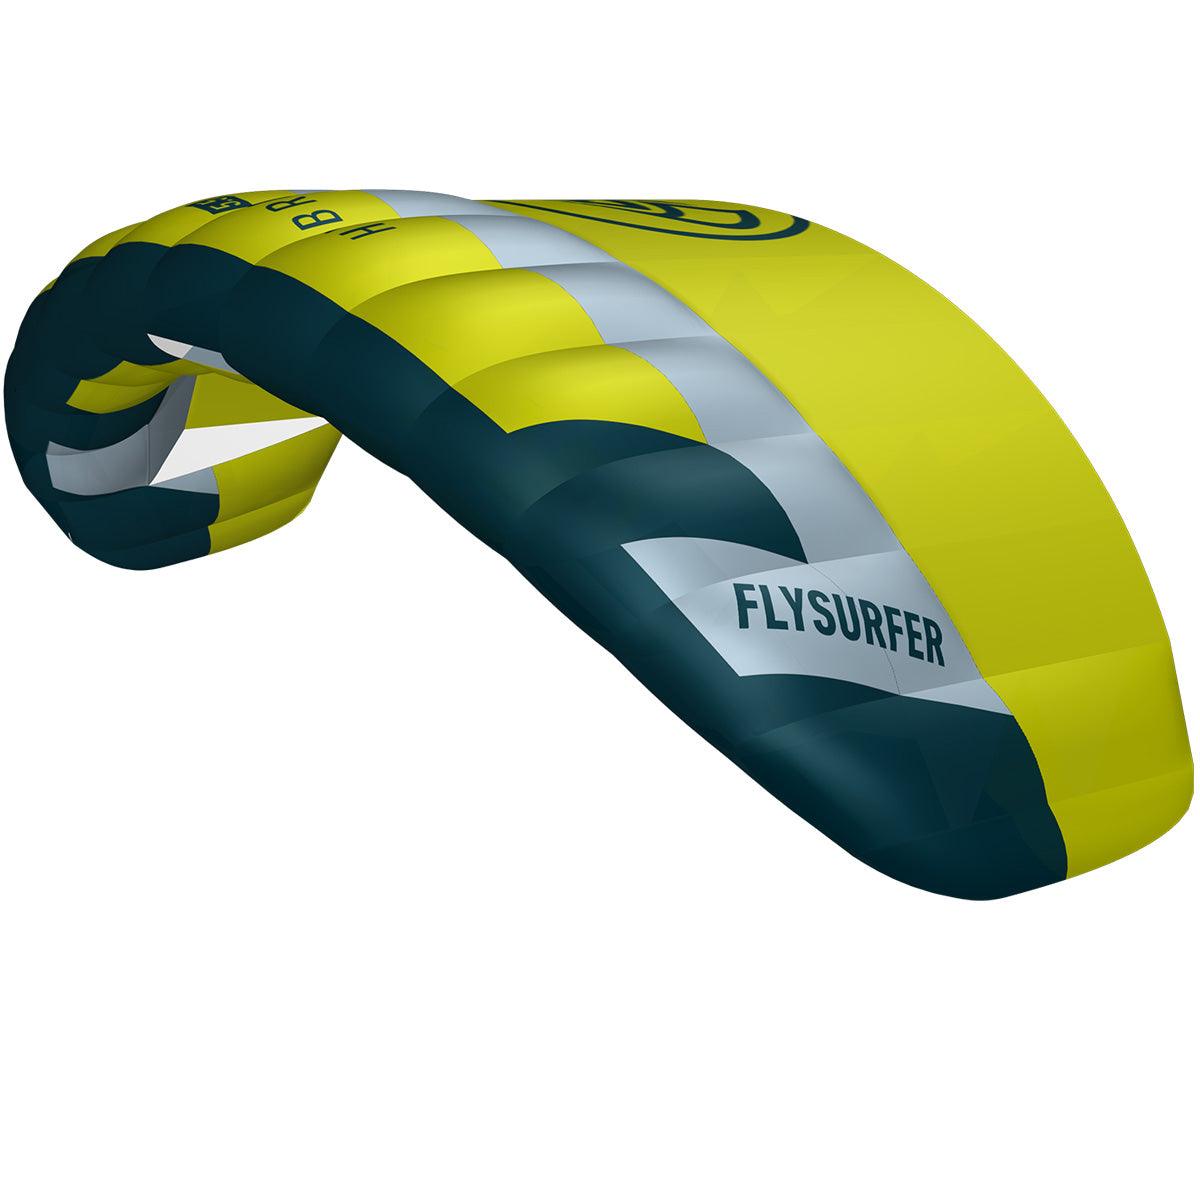 Flysurfer Hybrid - Kiteshop.com